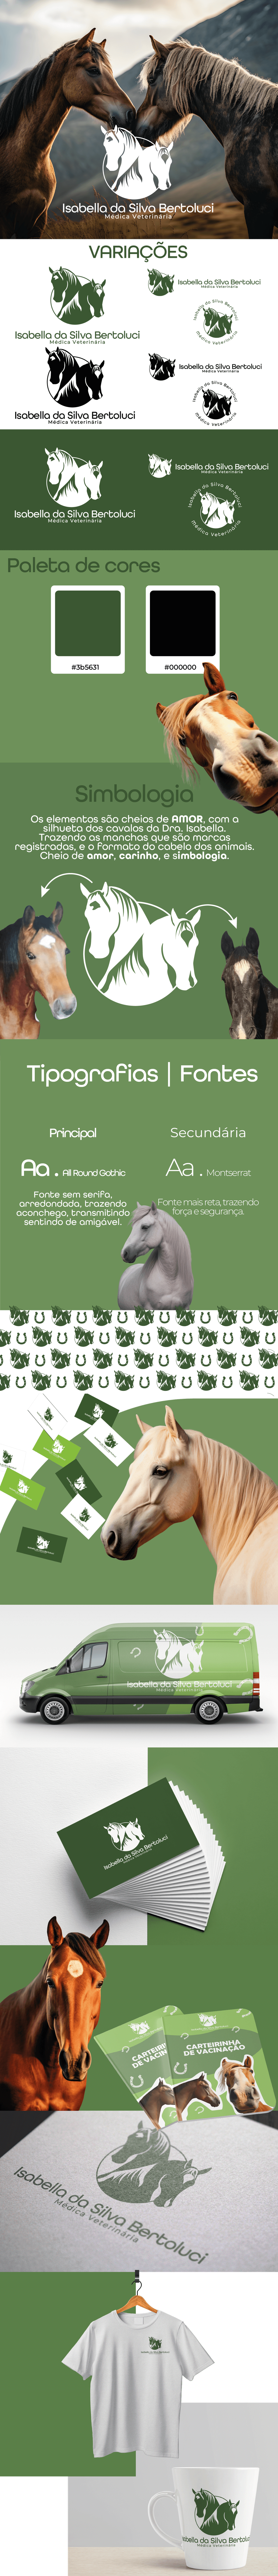 veterinaria pets cavalo horse animals animal ID Visual identidade visual marca Logotipo